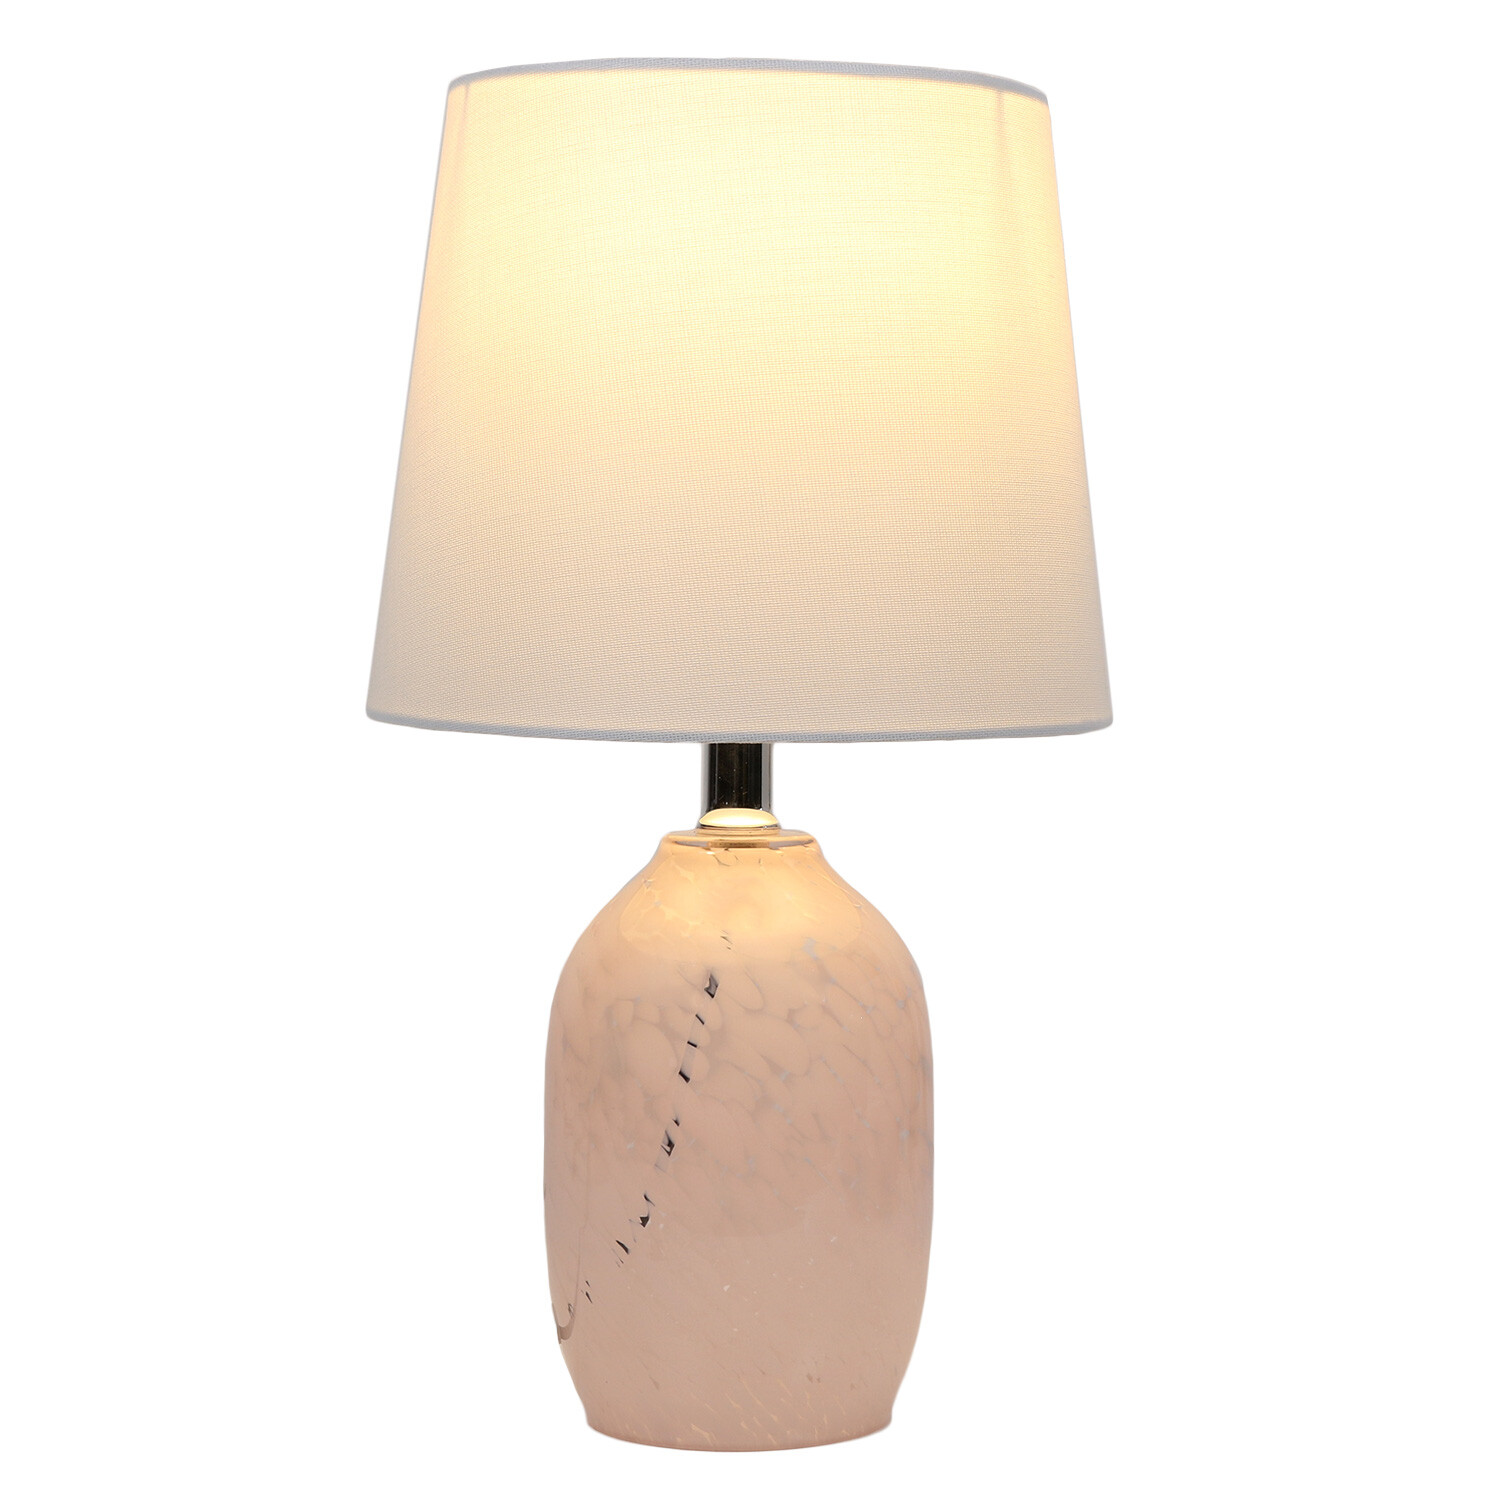 Alessia Table Lamp Image 2